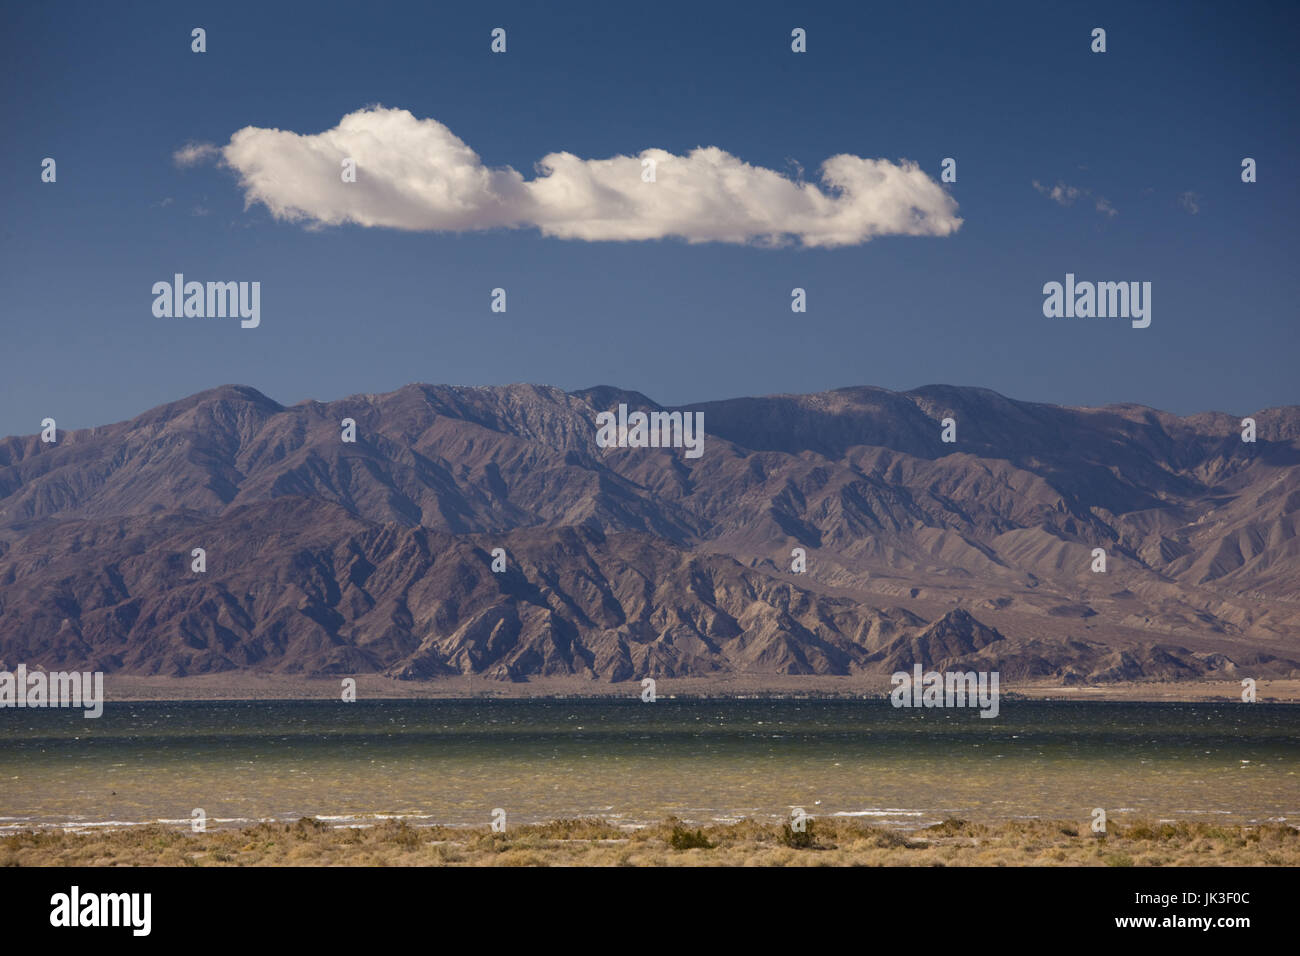 USA, California, Bombay Beach, Salton Sea area, Salton Sea landscape Stock Photo